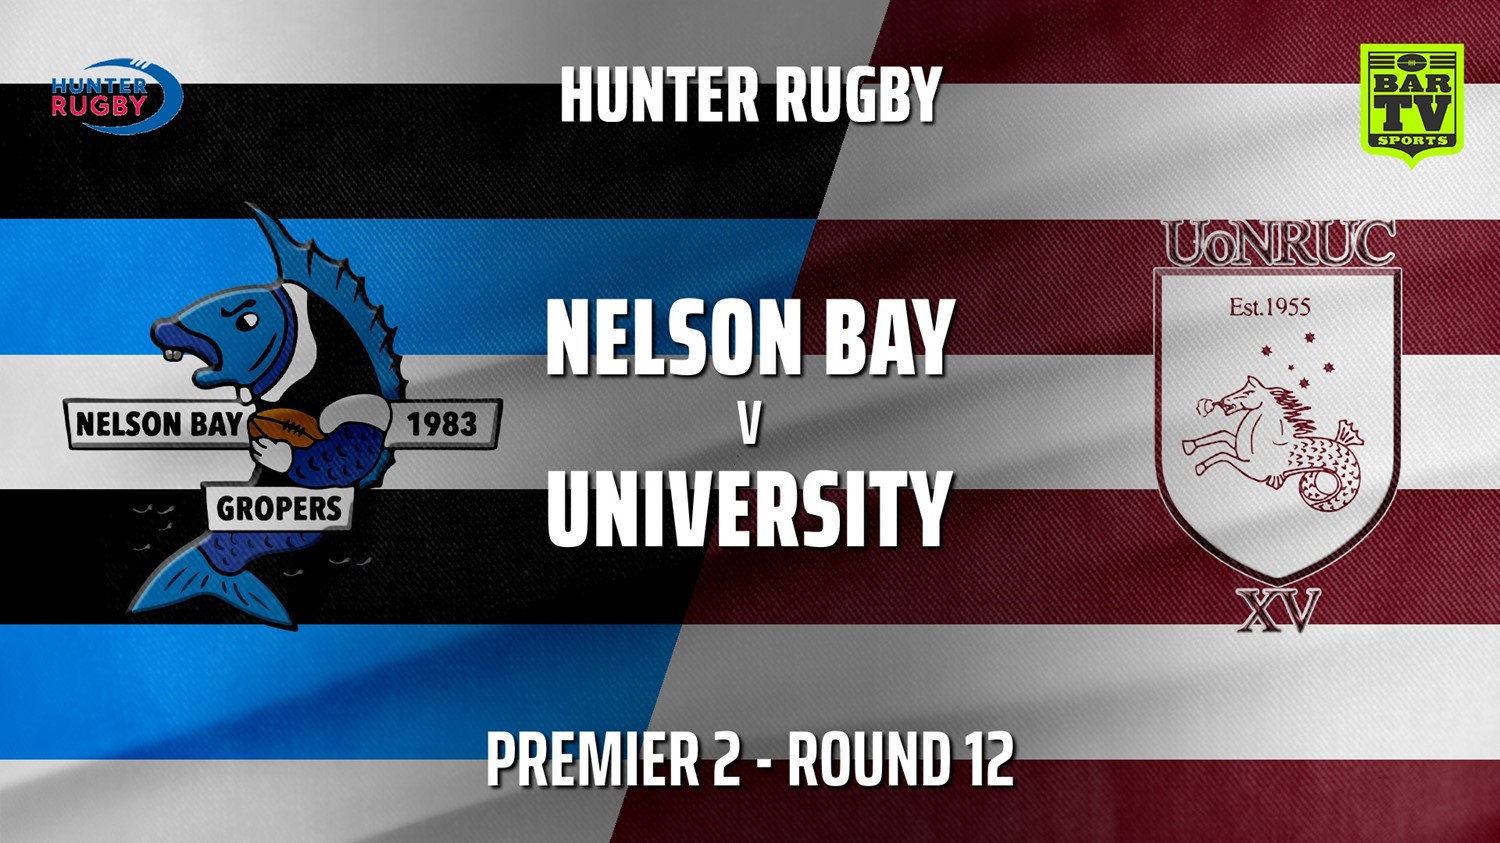 210710-Hunter Rugby Round 12 - Premier 2 - Nelson Bay Gropers v University Of Newcastle Slate Image